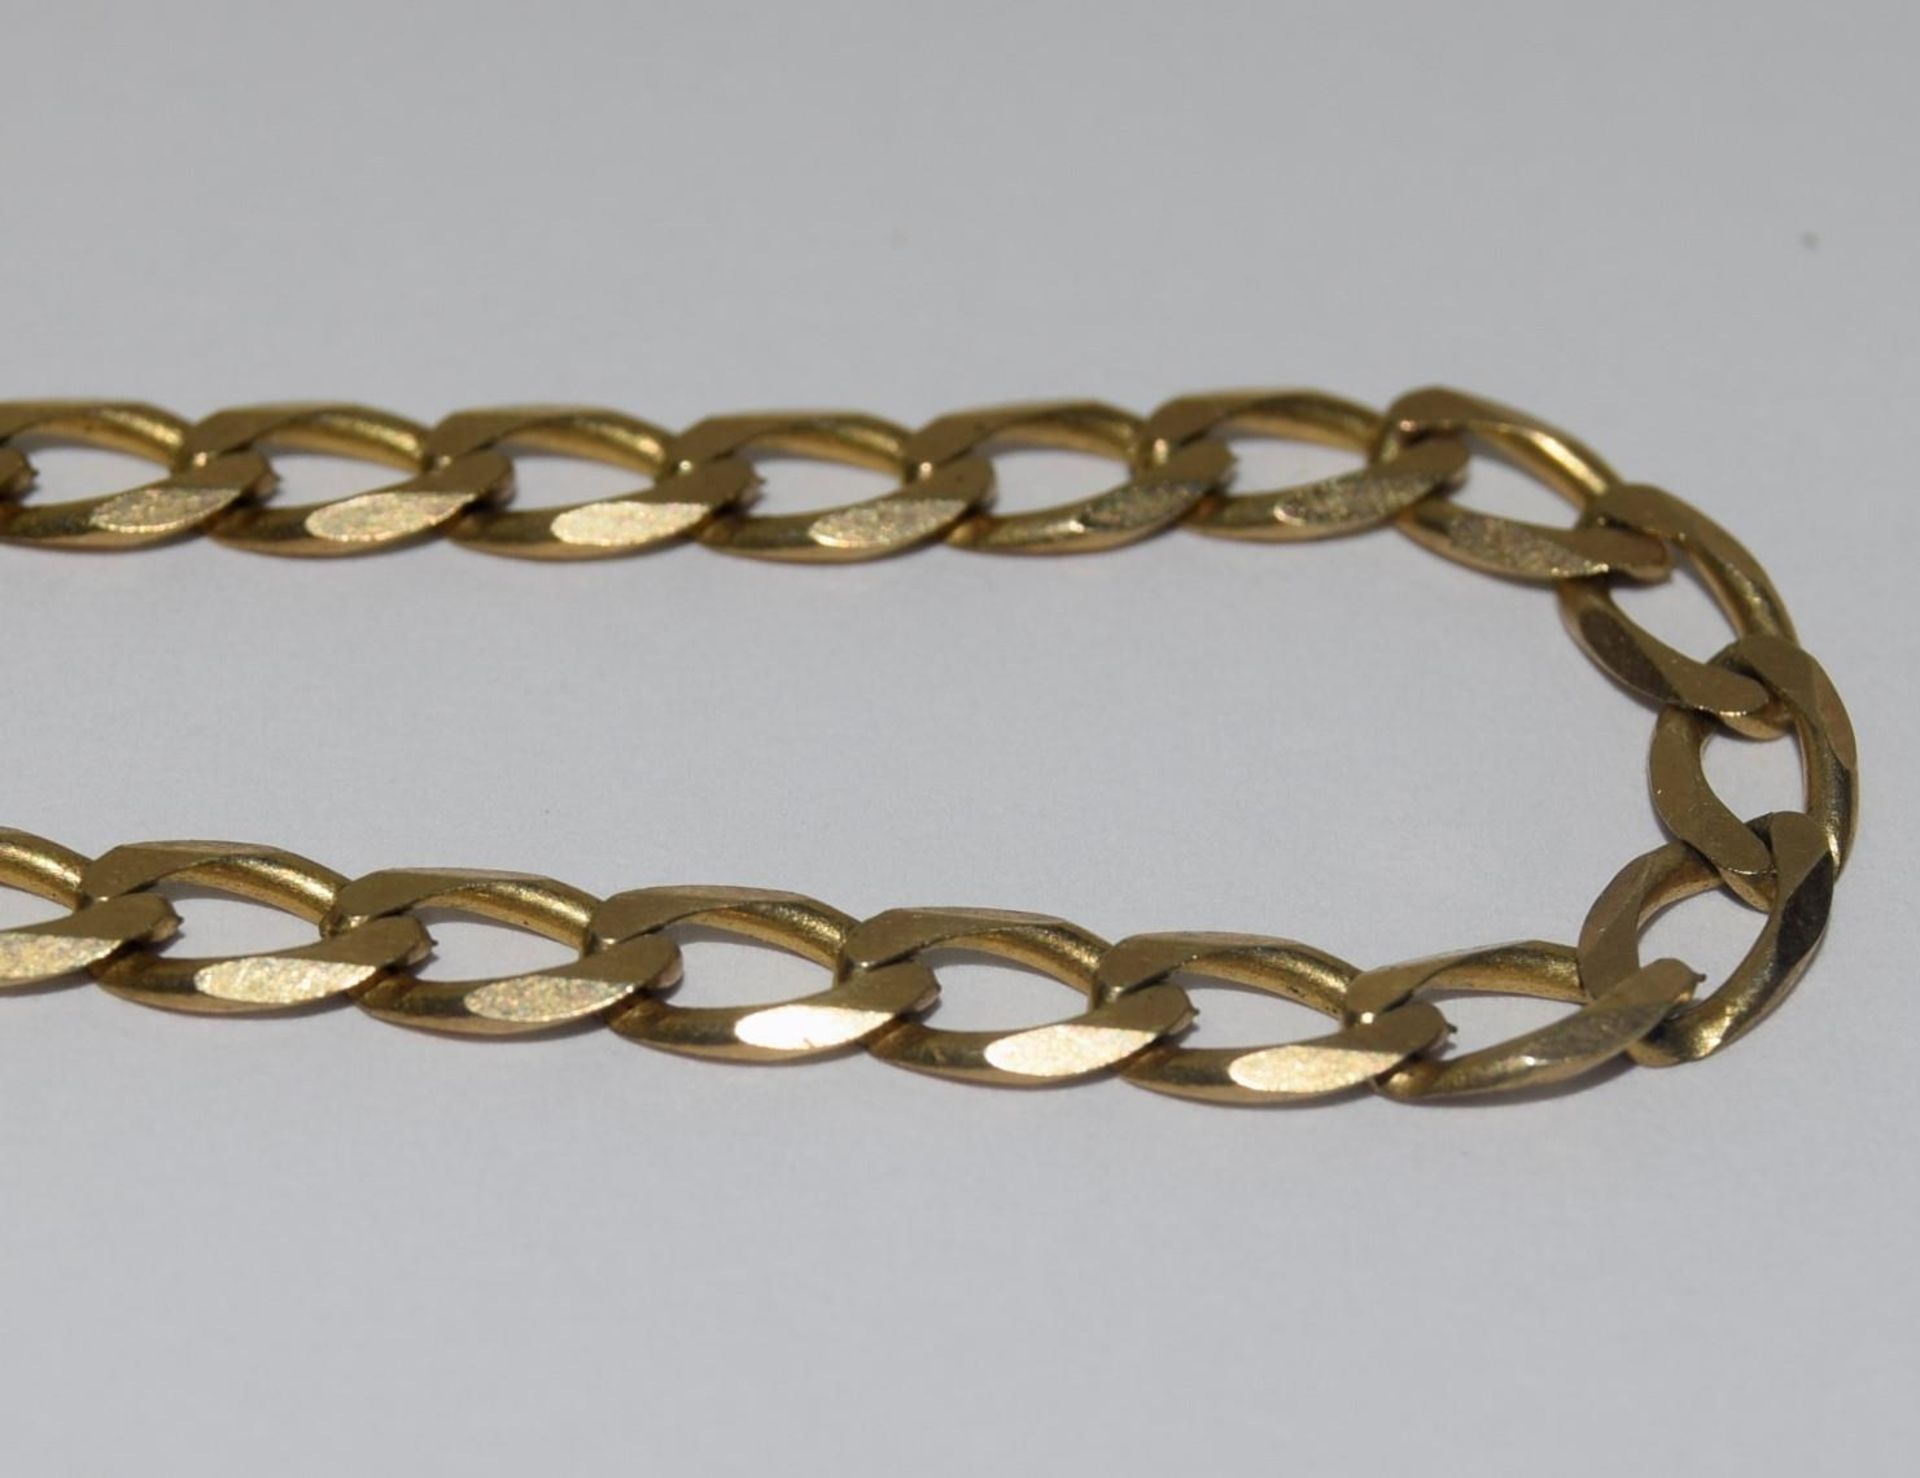 9ct gold flatlink chain 52cm long 10gm - Image 5 of 5